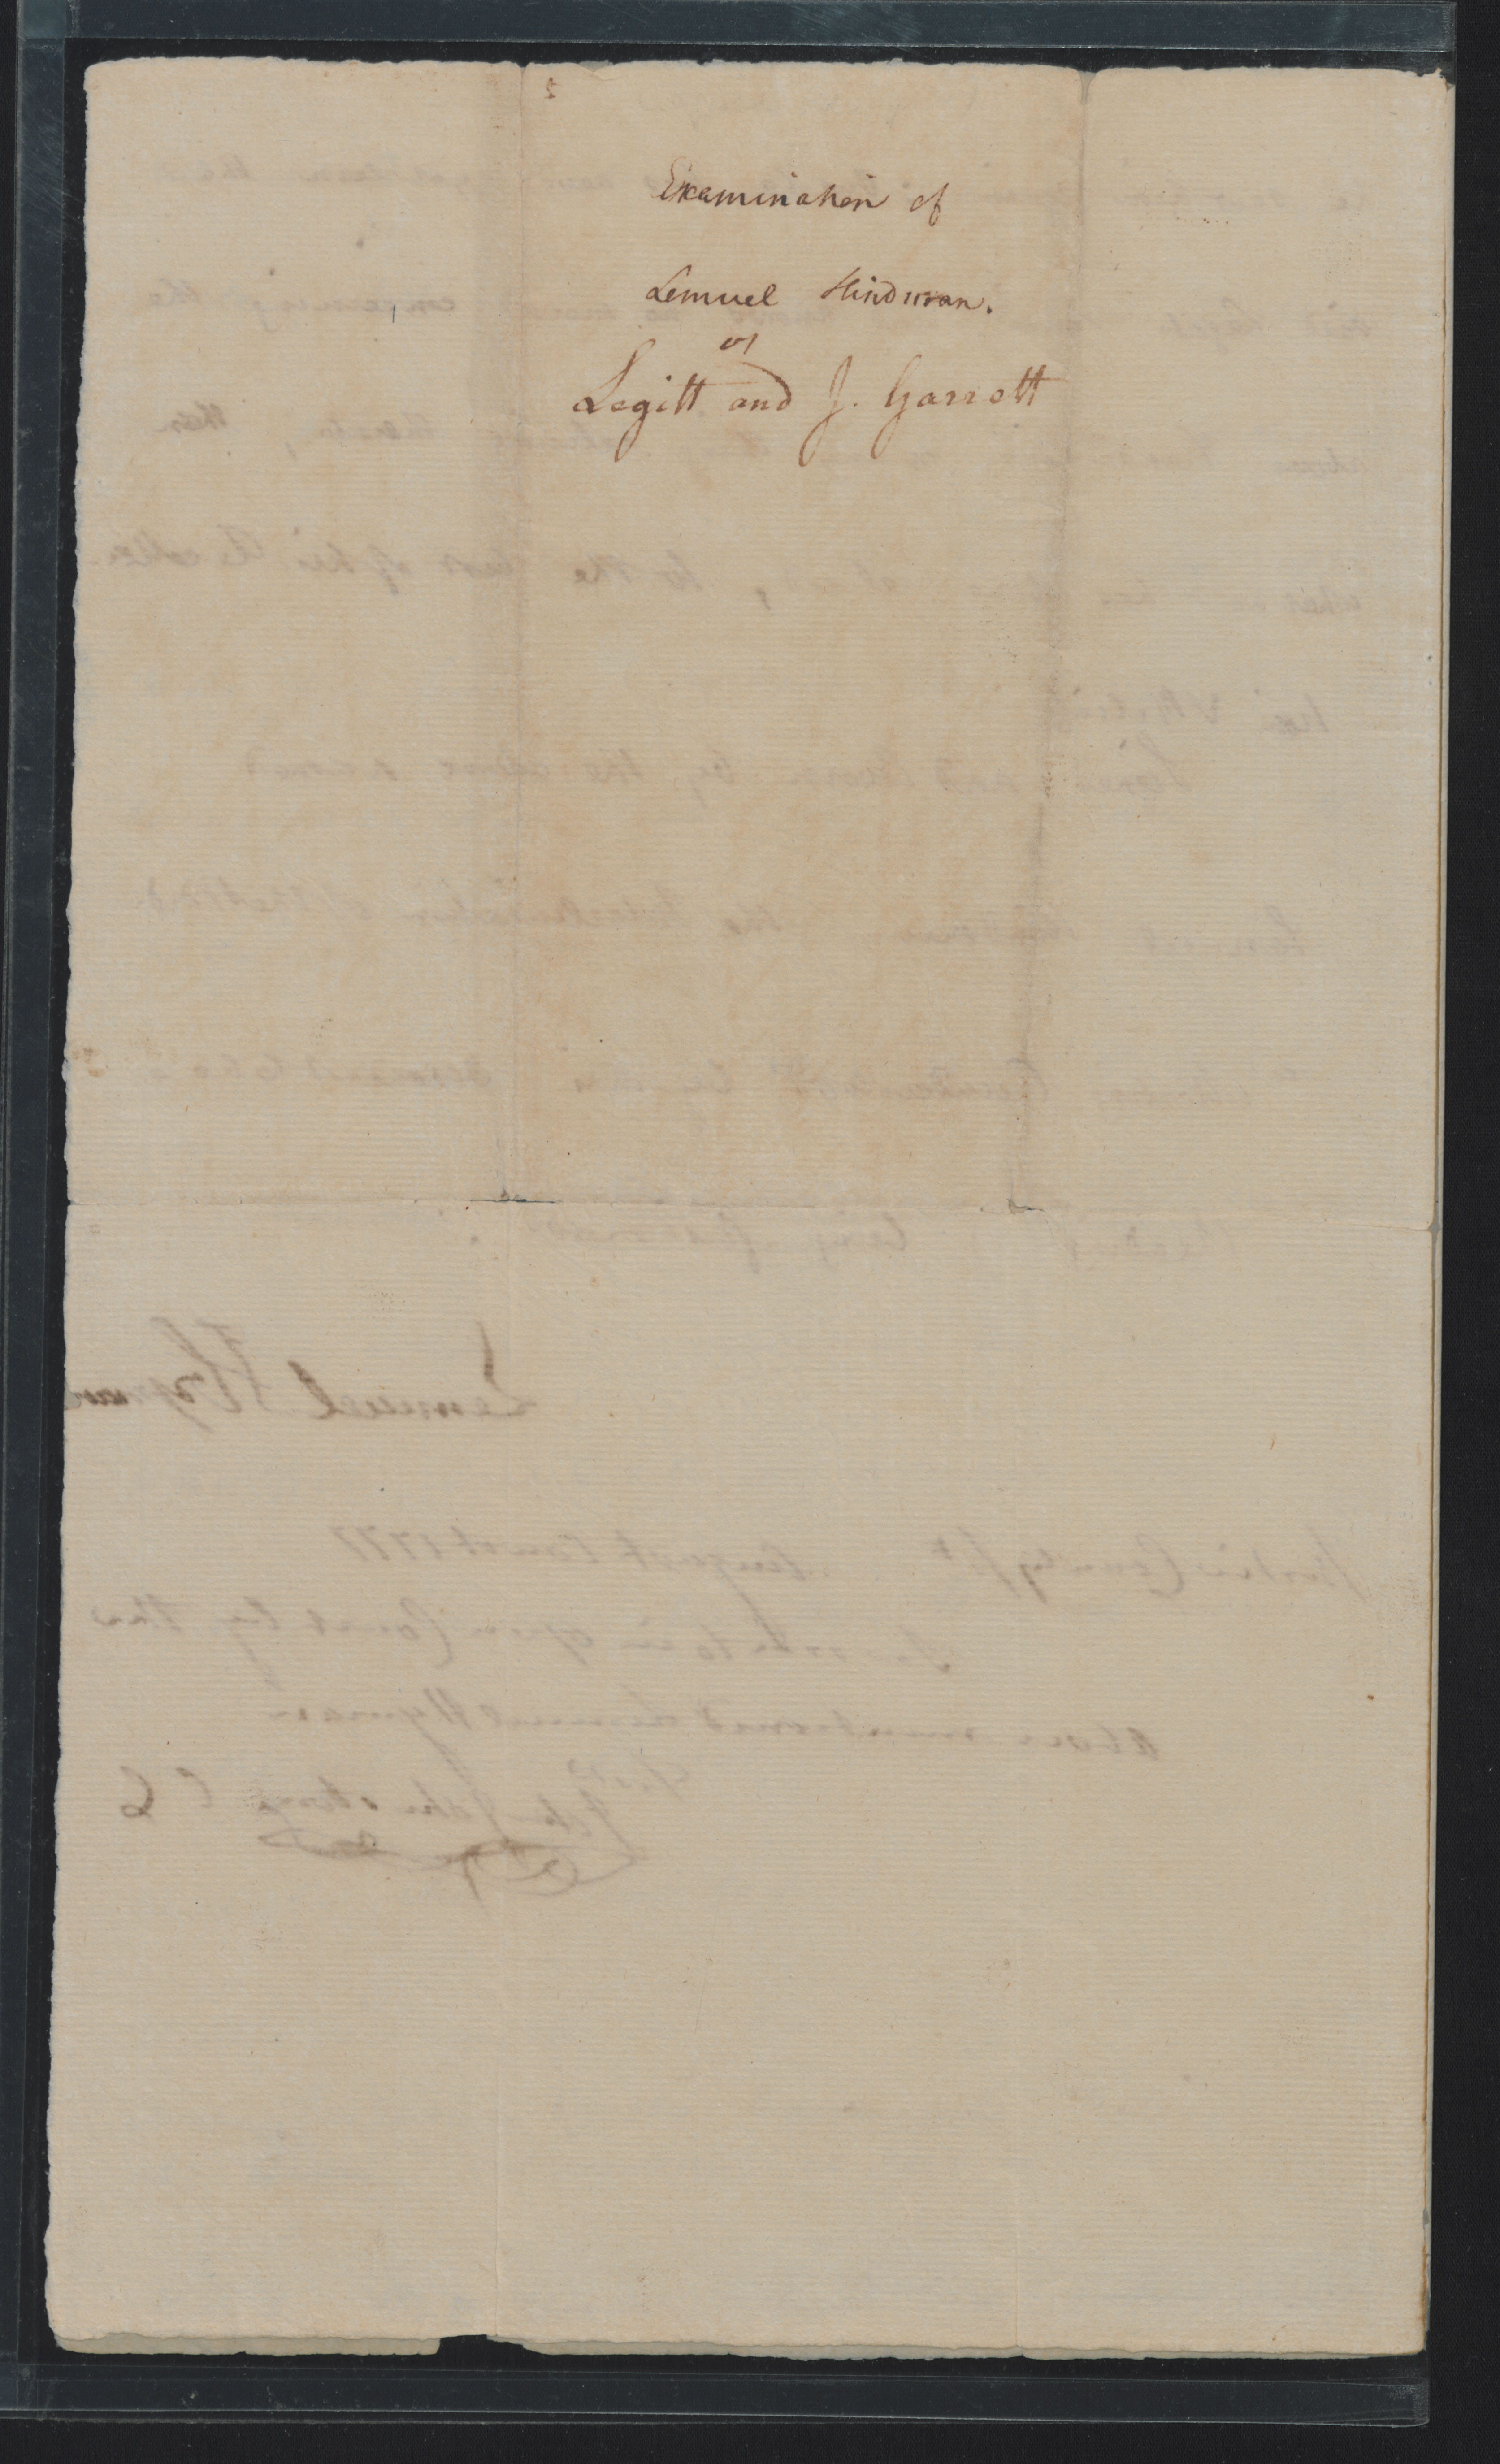 Examination of Lemuel Hindman, 12 August 1777, page 4